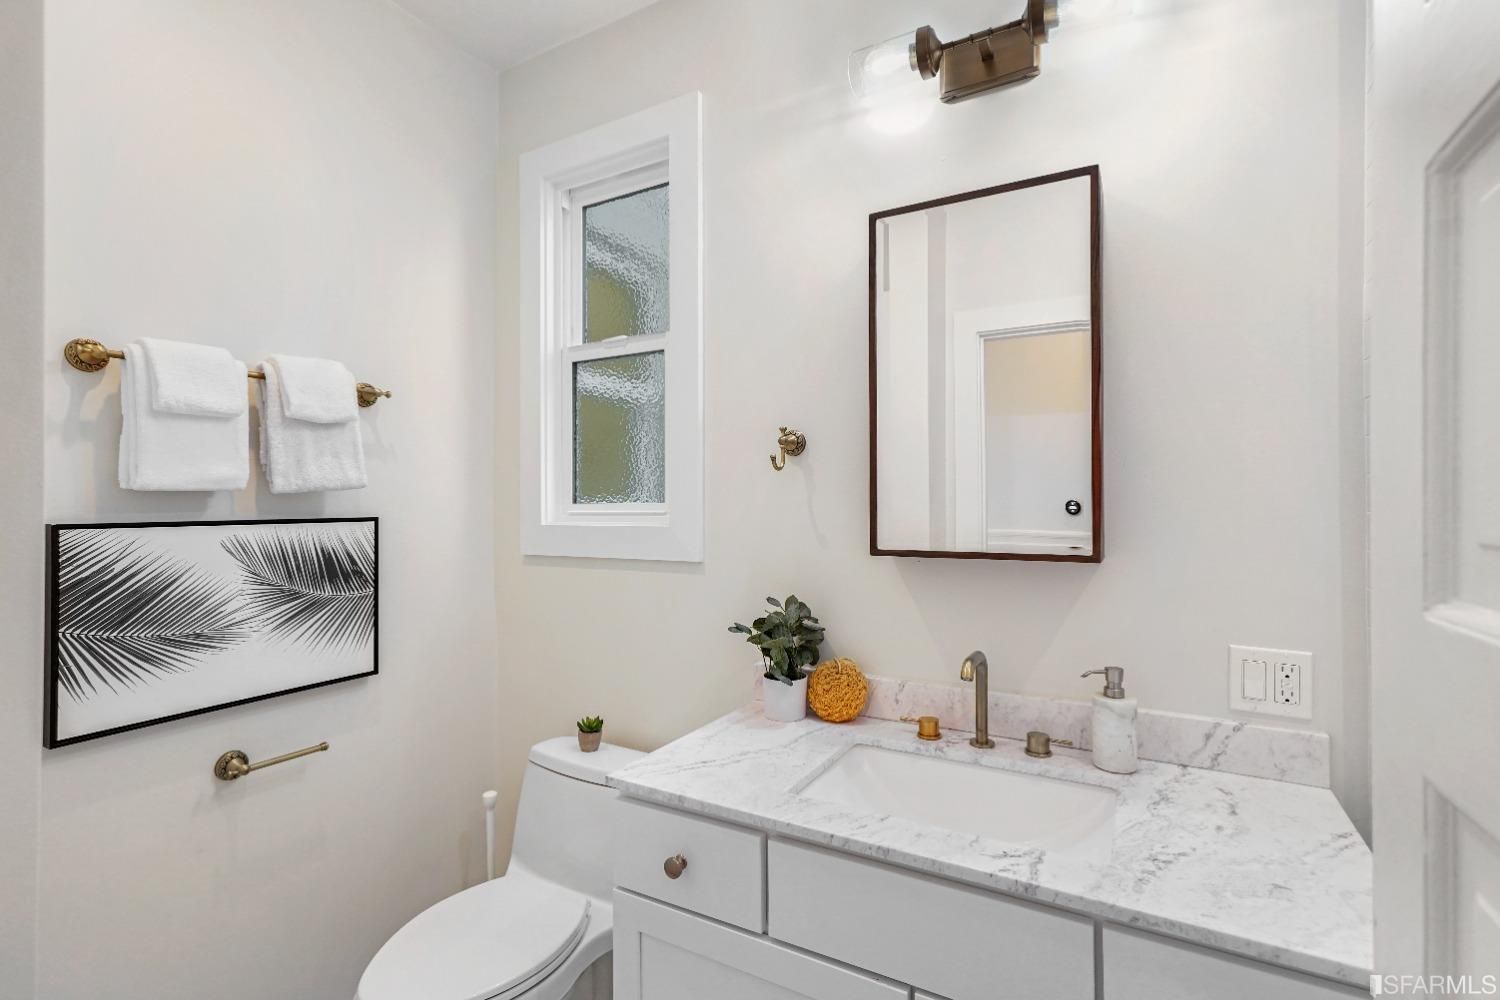 Property Photo: Bathroom with large vanity